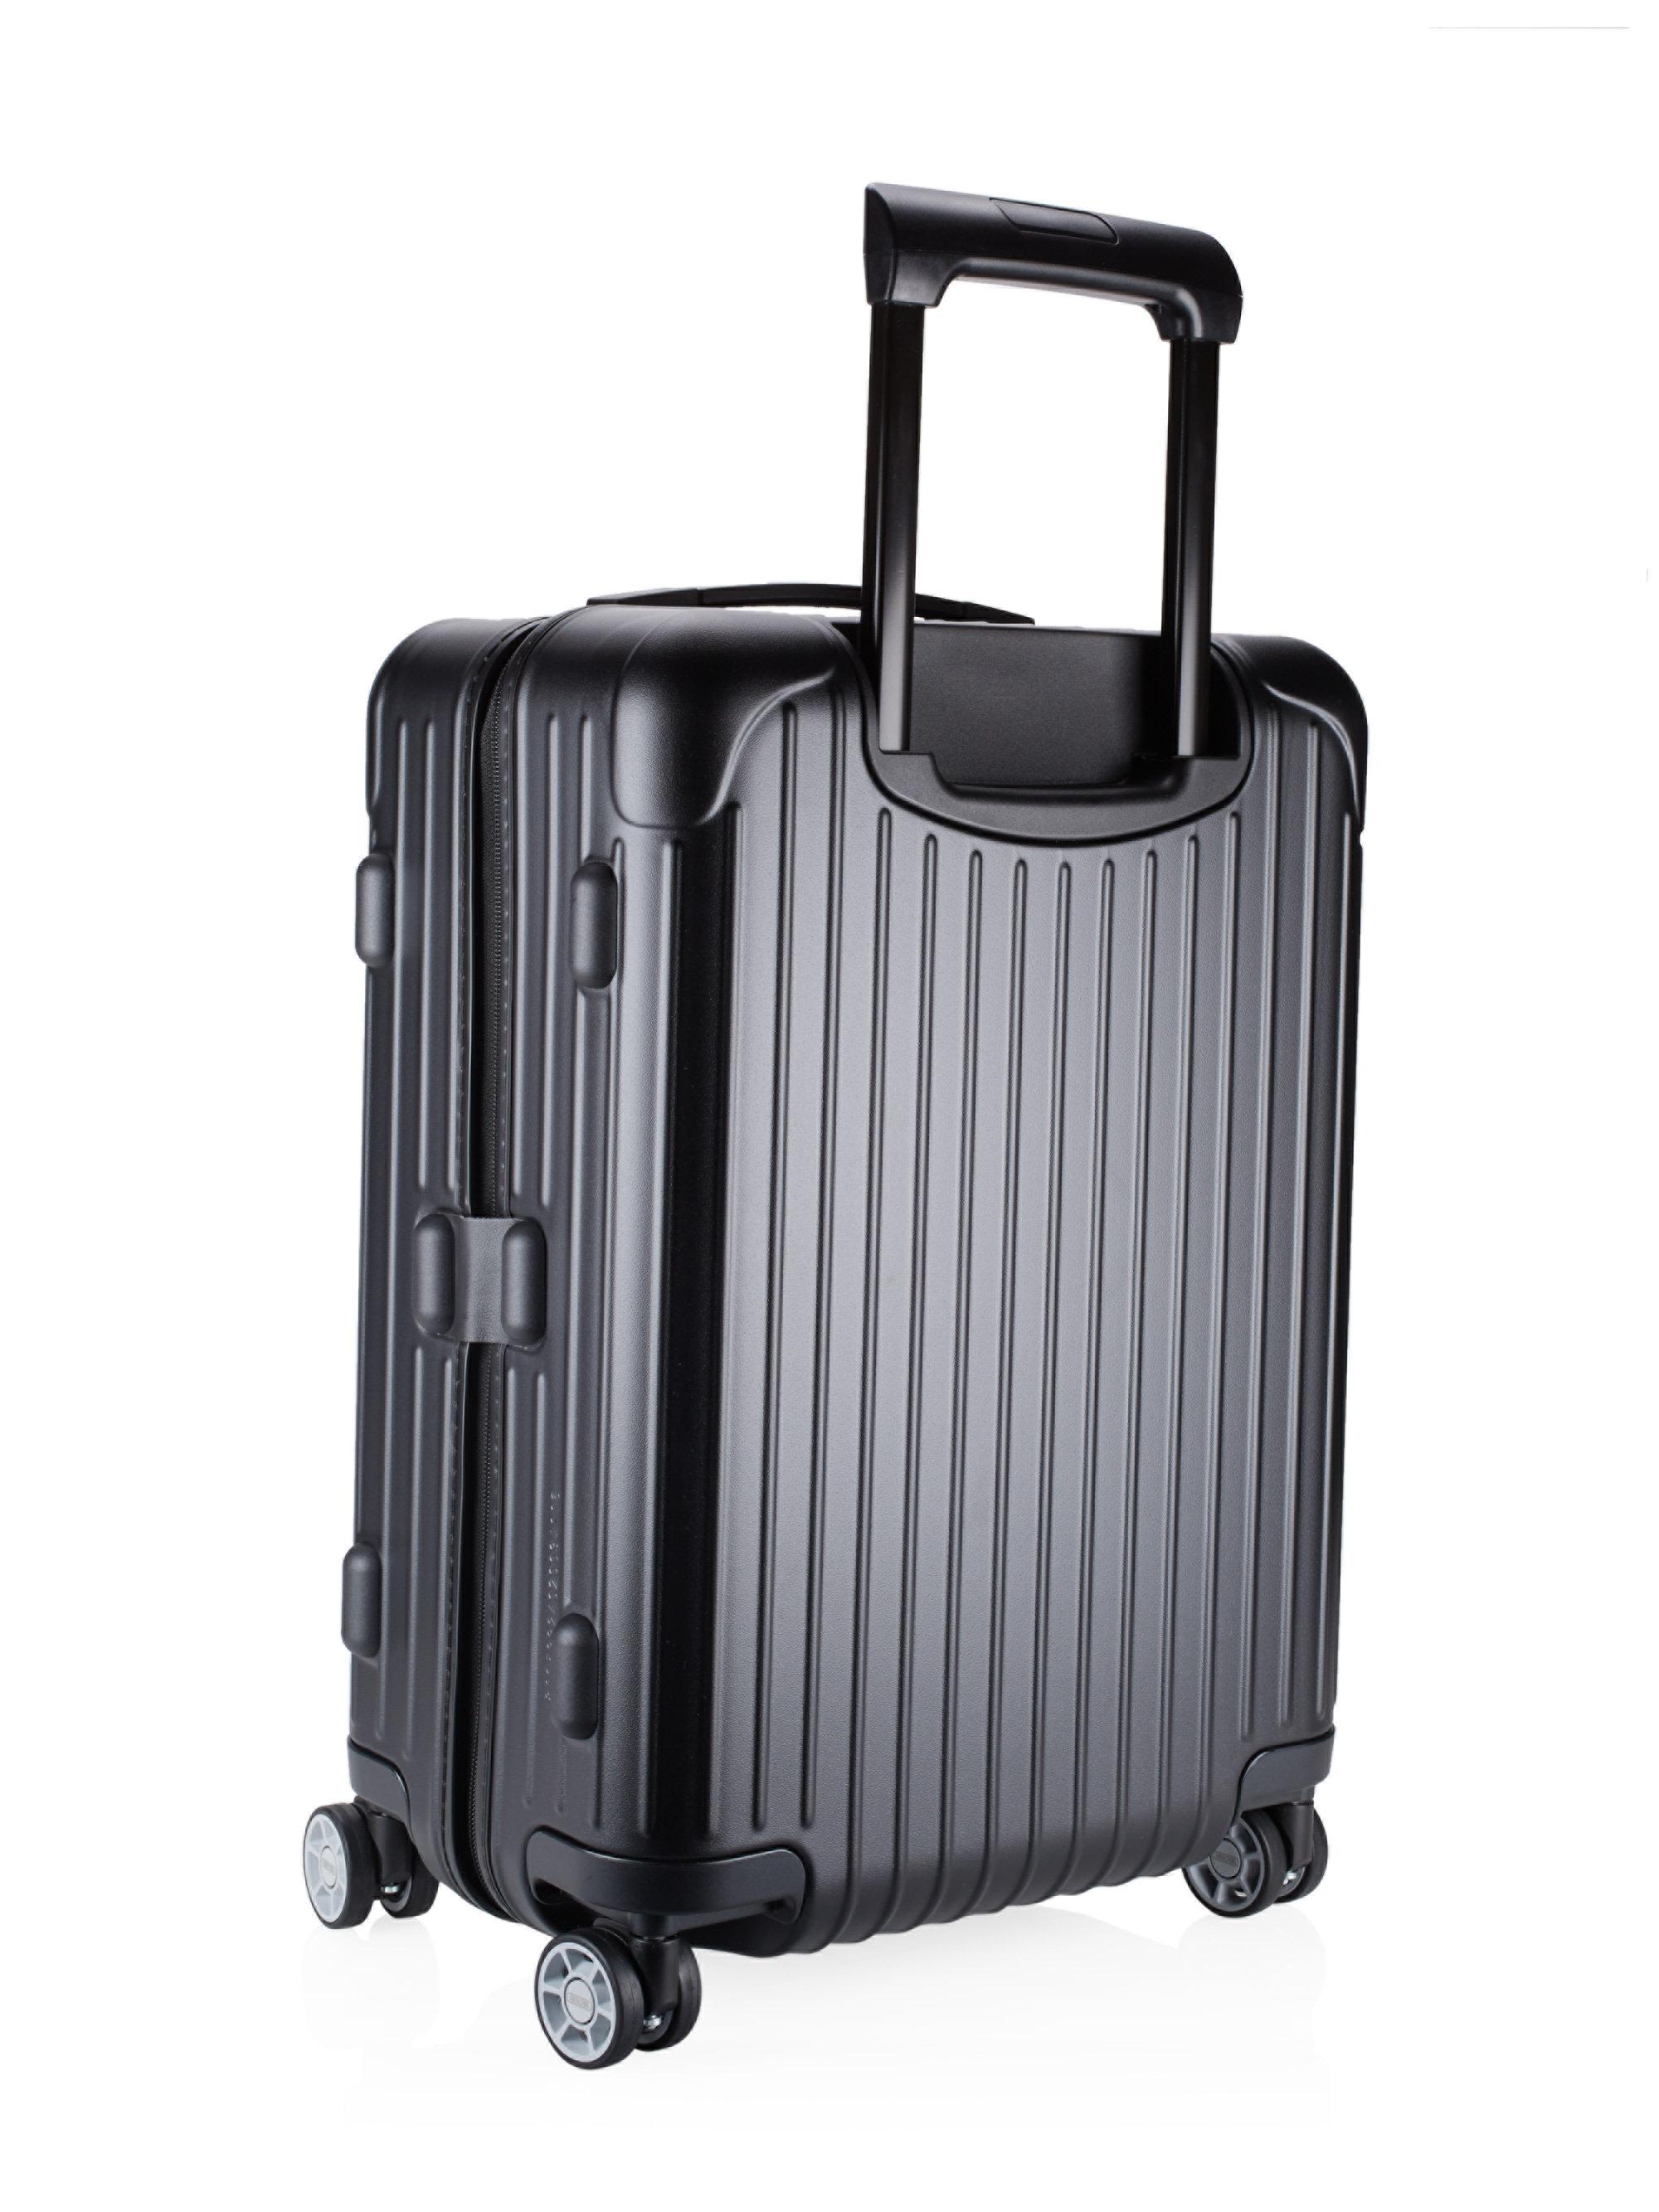 Lyst - Rimowa Salsa 21" Multiwheel Suitcase in Black